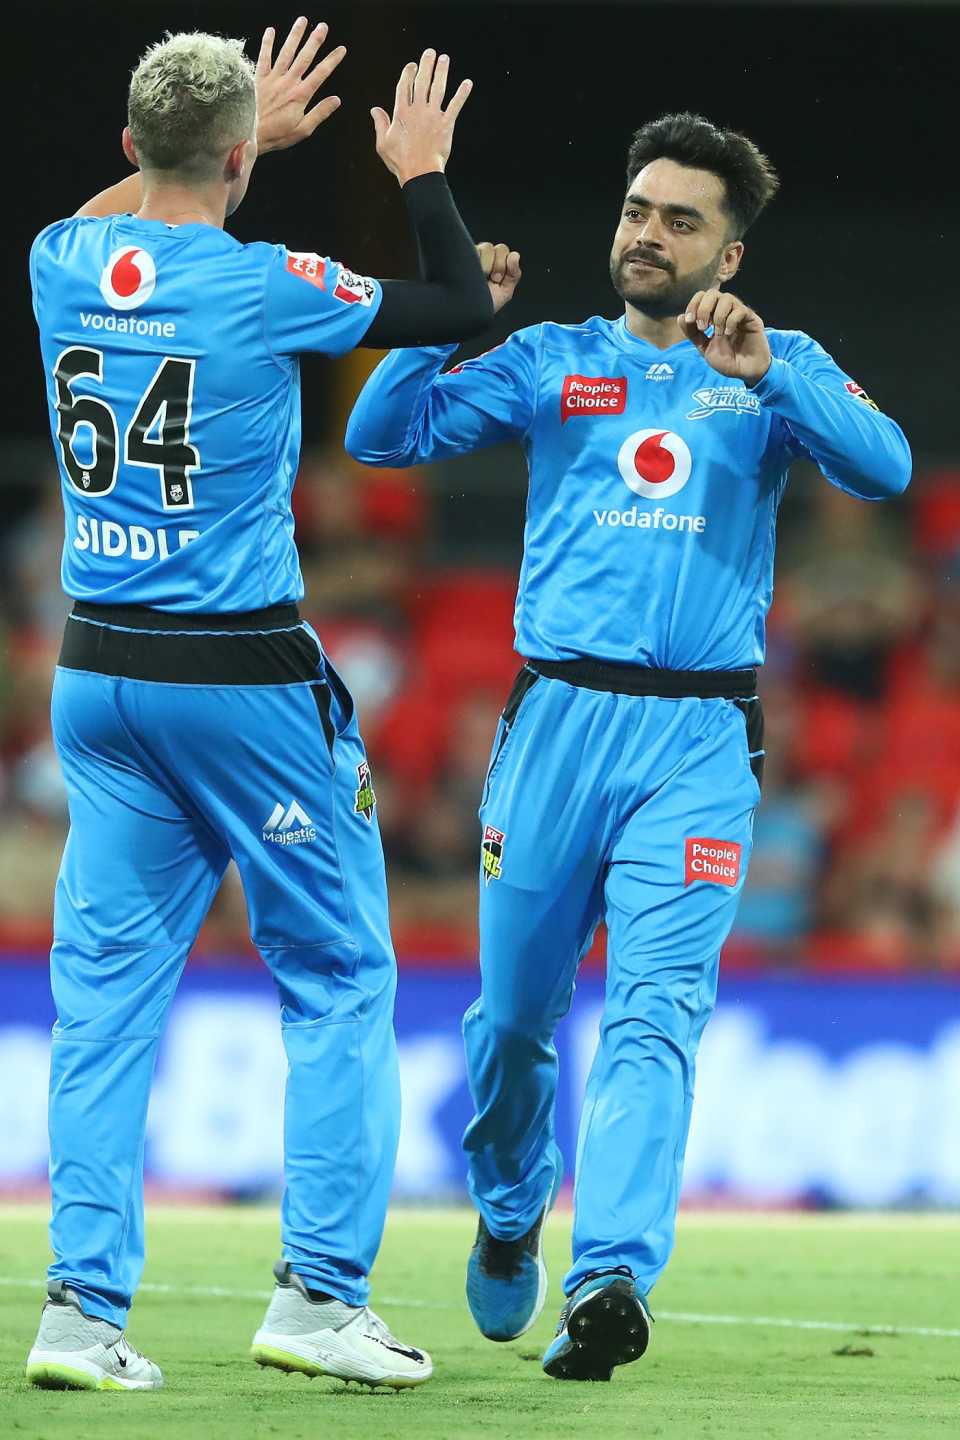 Rashid Khan celebrates with Peter Siddle after dismissing Jack Edwards, Adelaide Strikers vs Sydney Sixers, BBL 2020-21, Gold Coast, January 3, 2021
